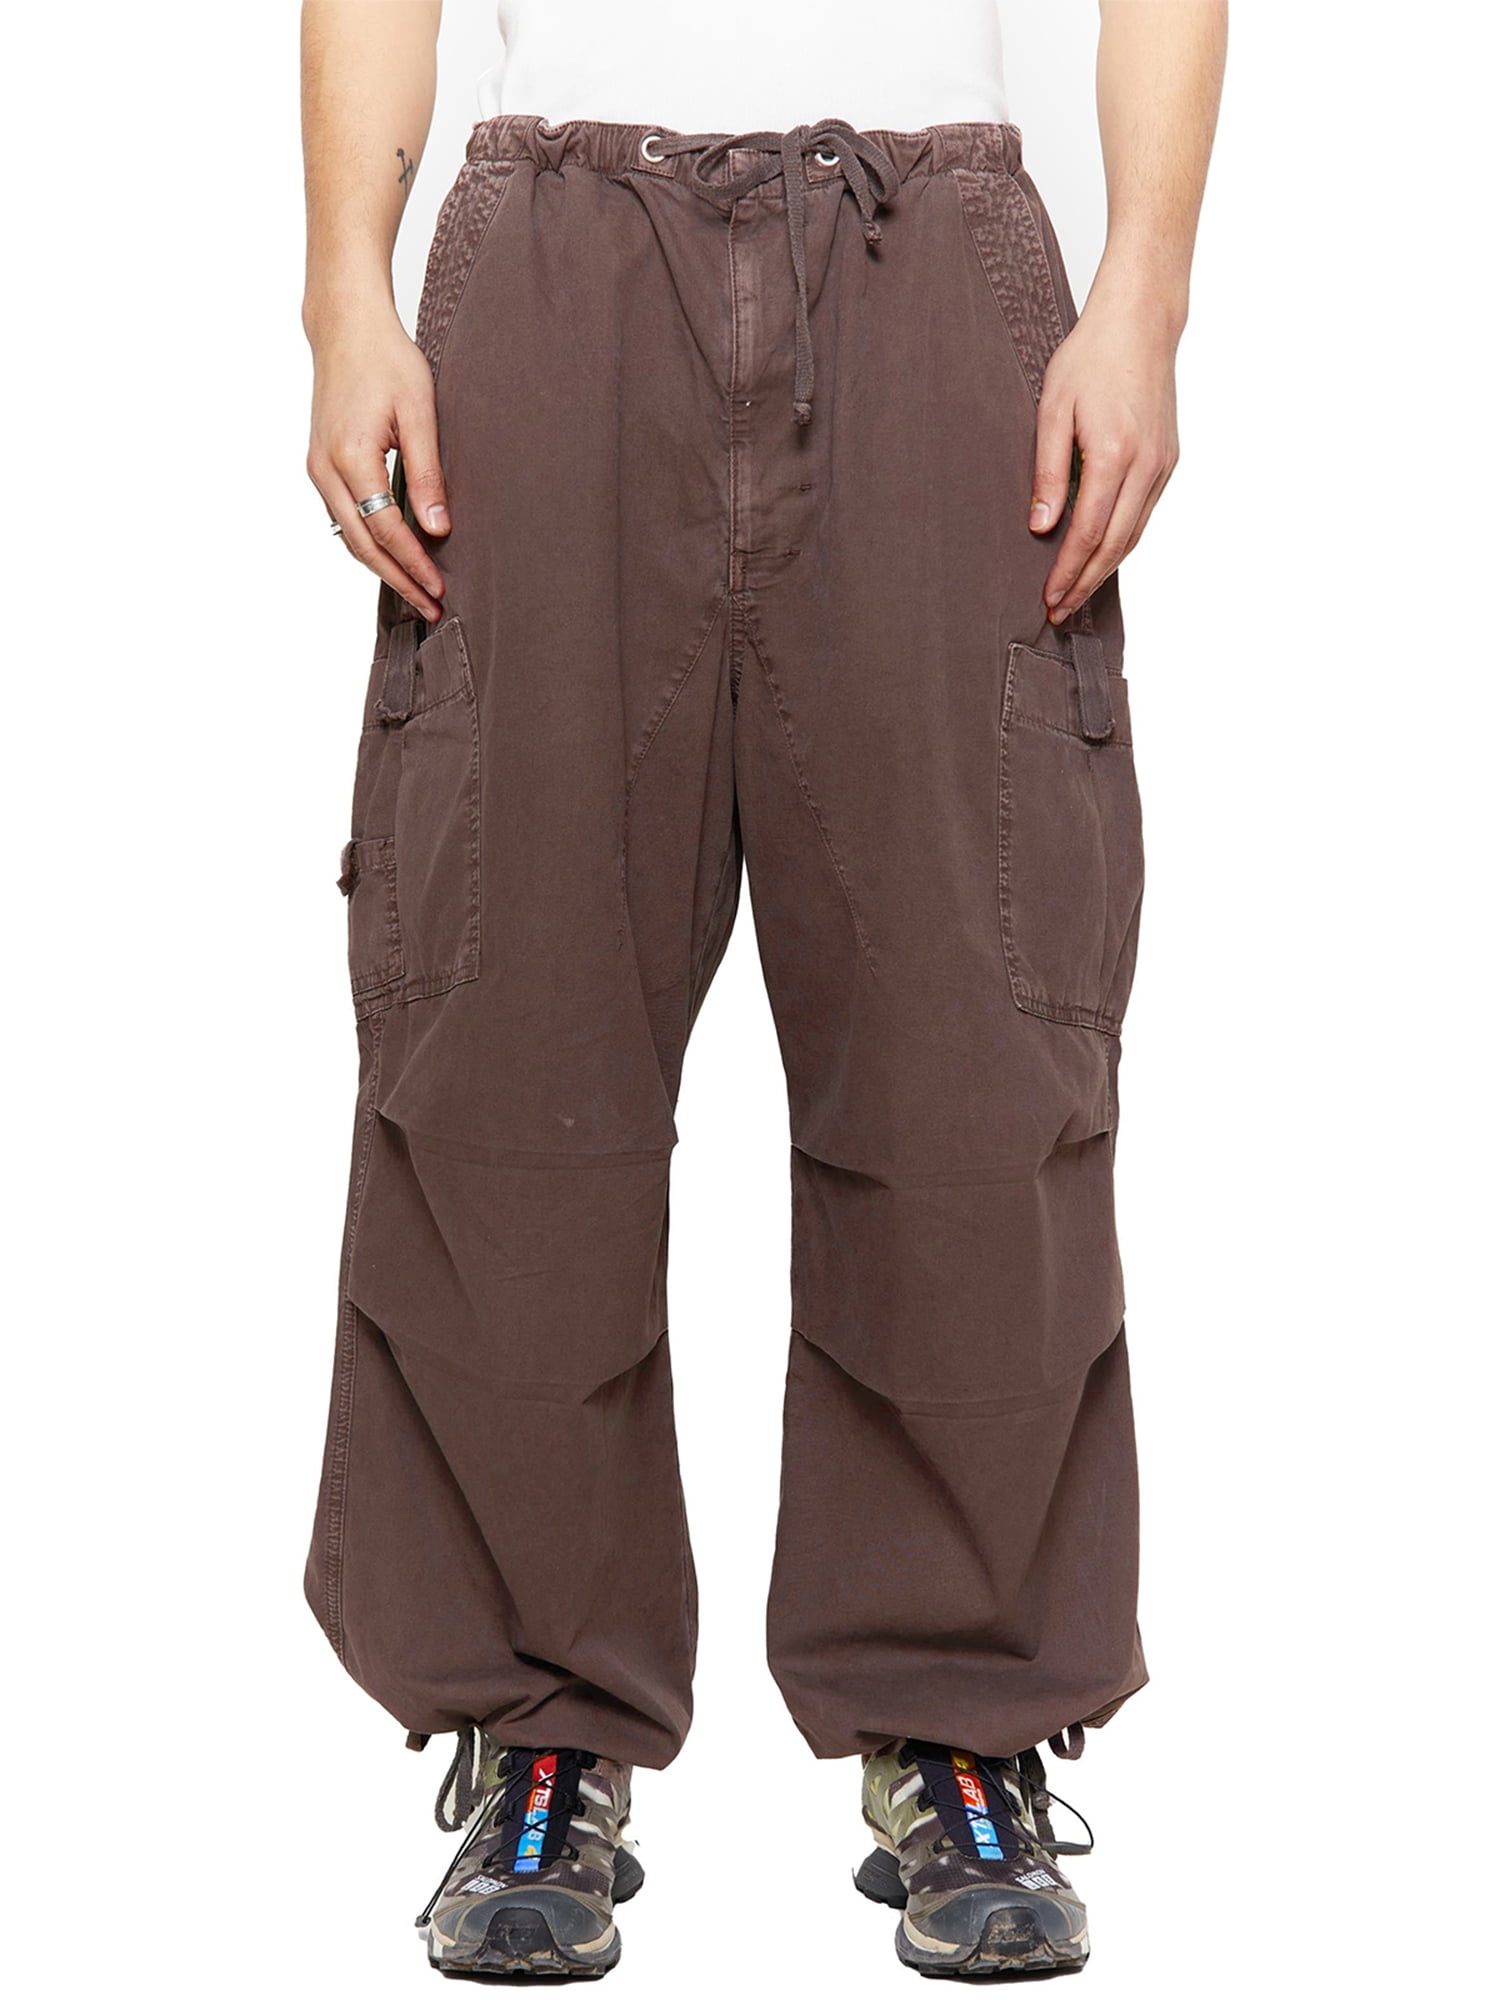 Baggy Cargo Pants for Women Men Elastic Waist Drawstring Wide Leg Trousers Pockets -